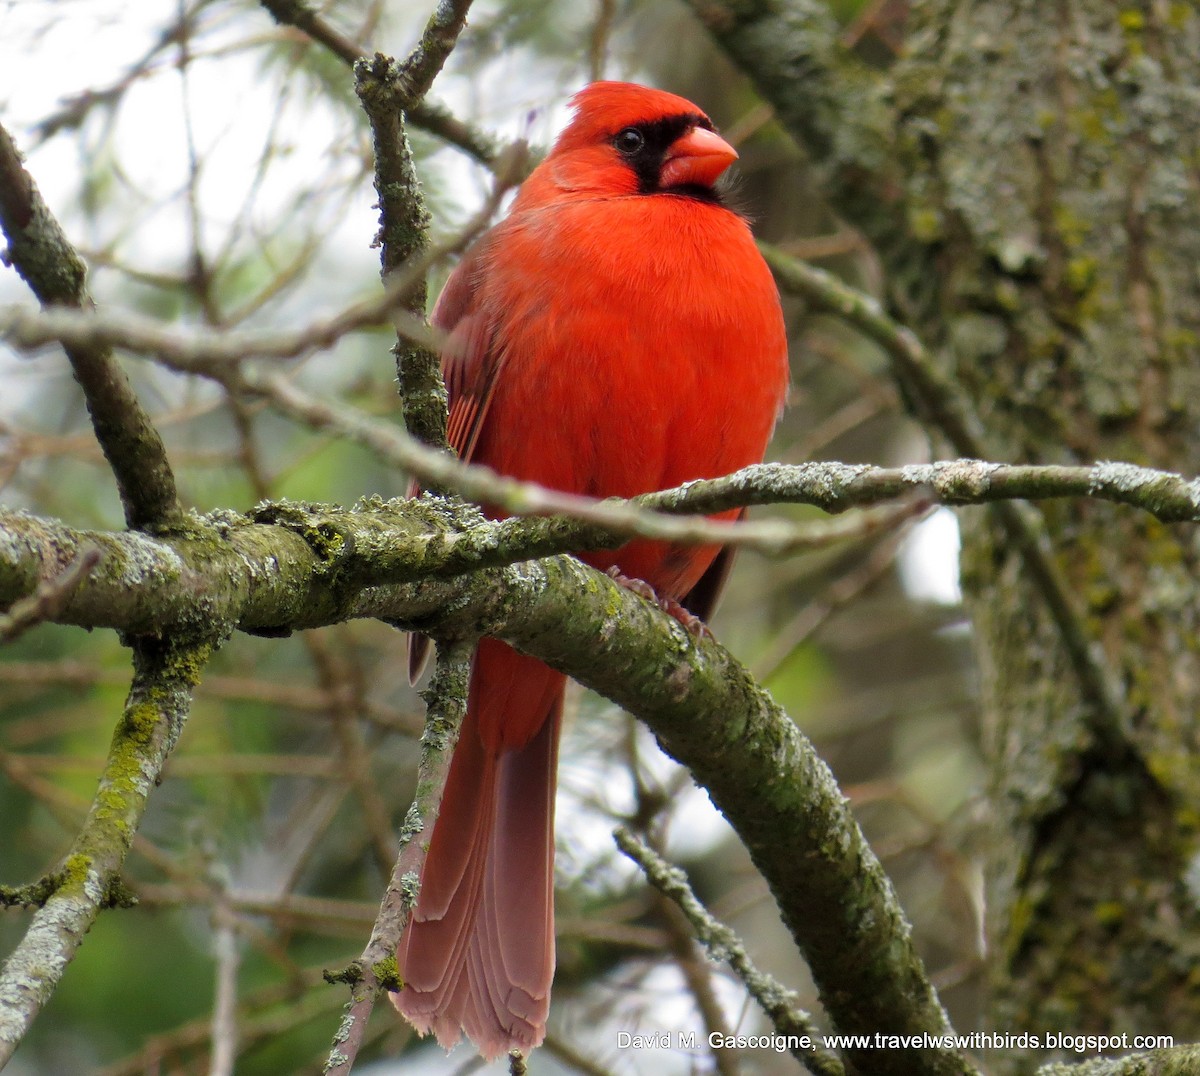 Northern Cardinal (Common) - David Gascoigne